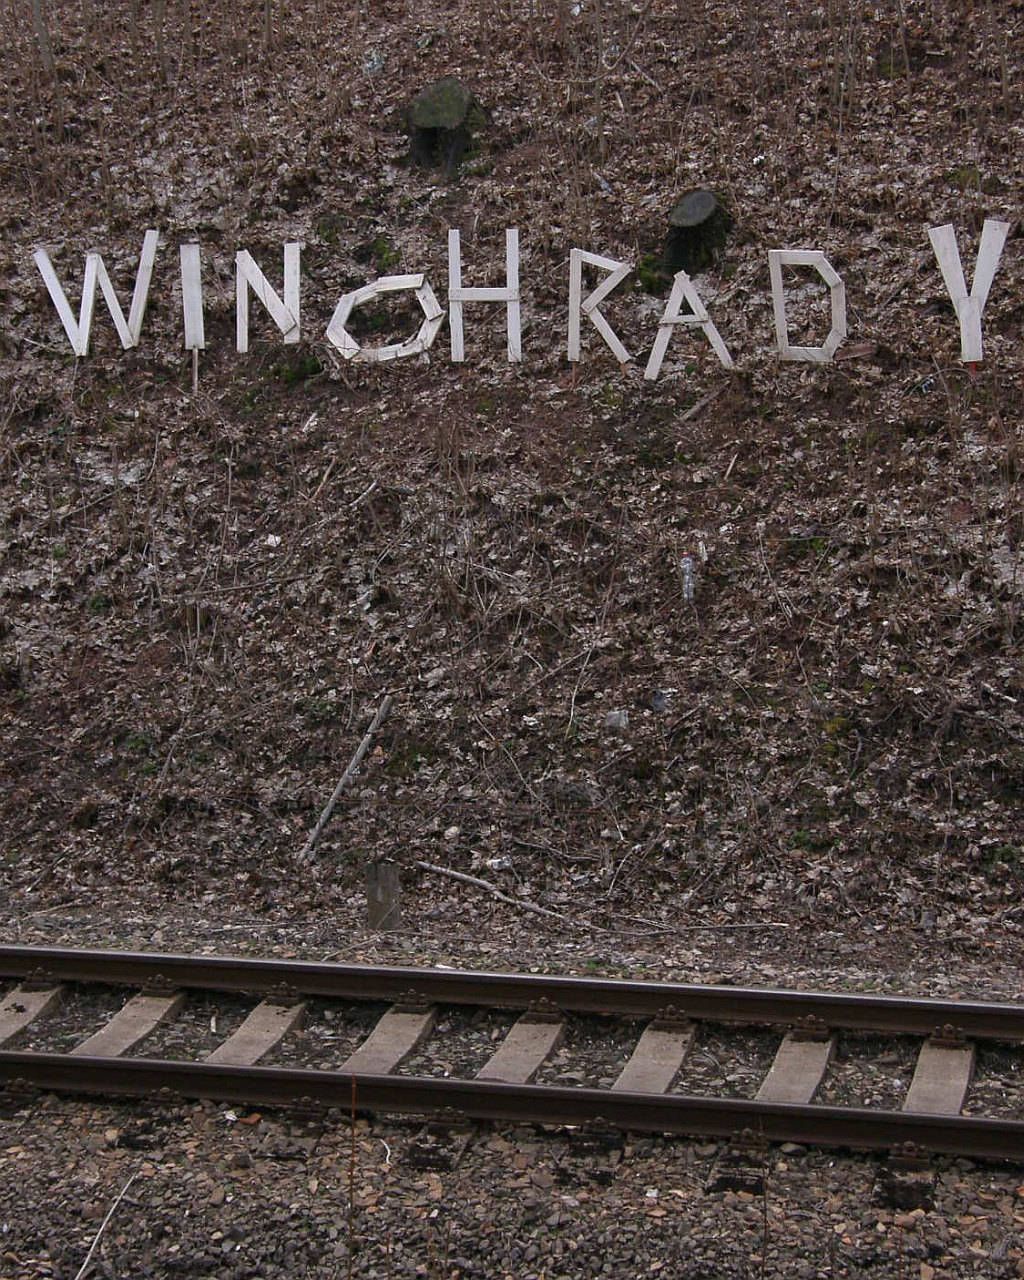 Winohrady